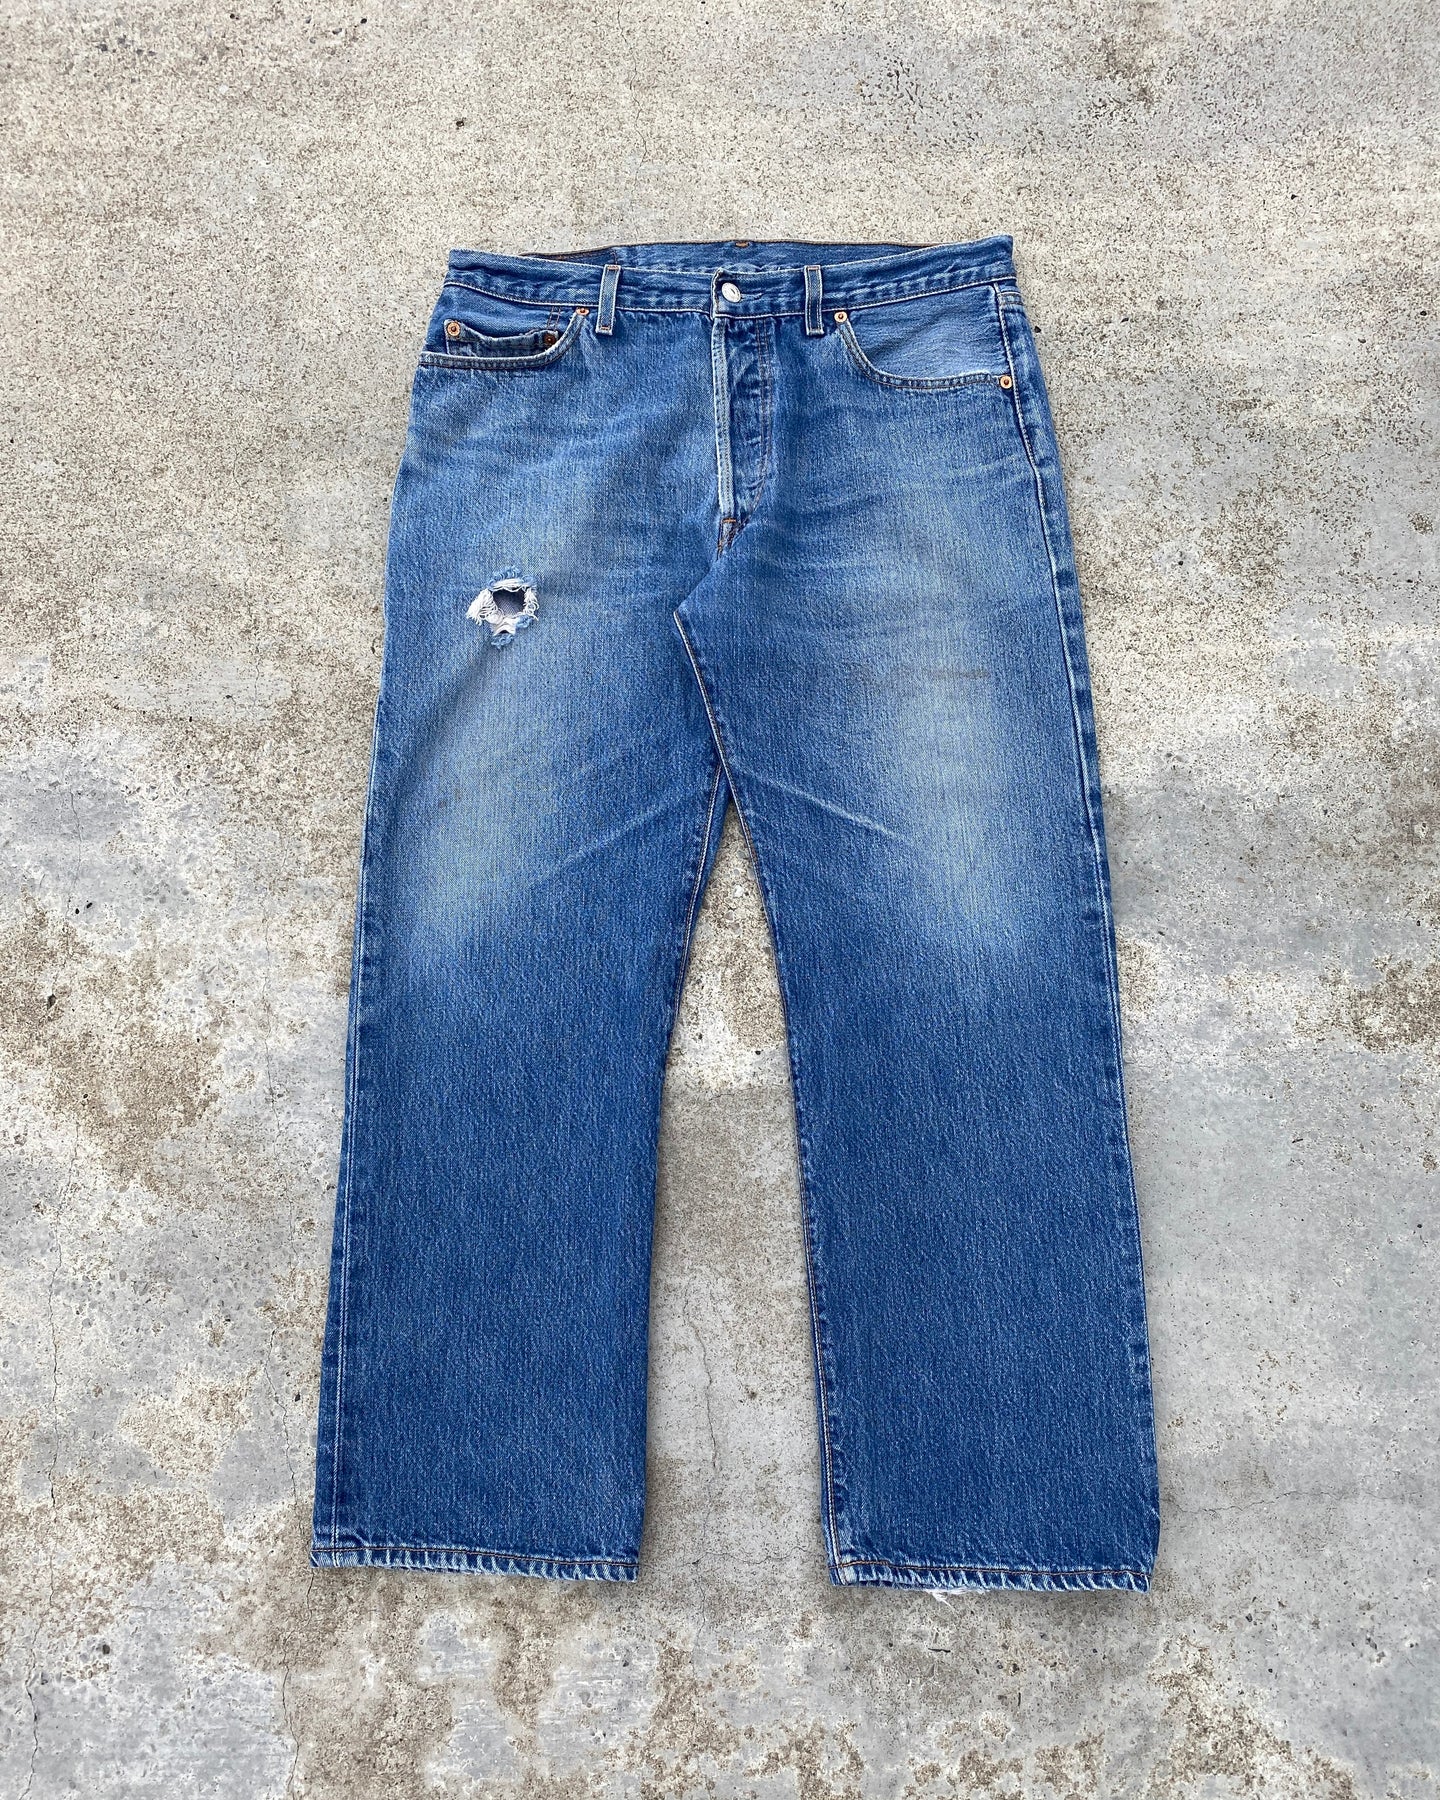 1990s Levi's 501 Indigo Wash Jeans - Size 34 x 29